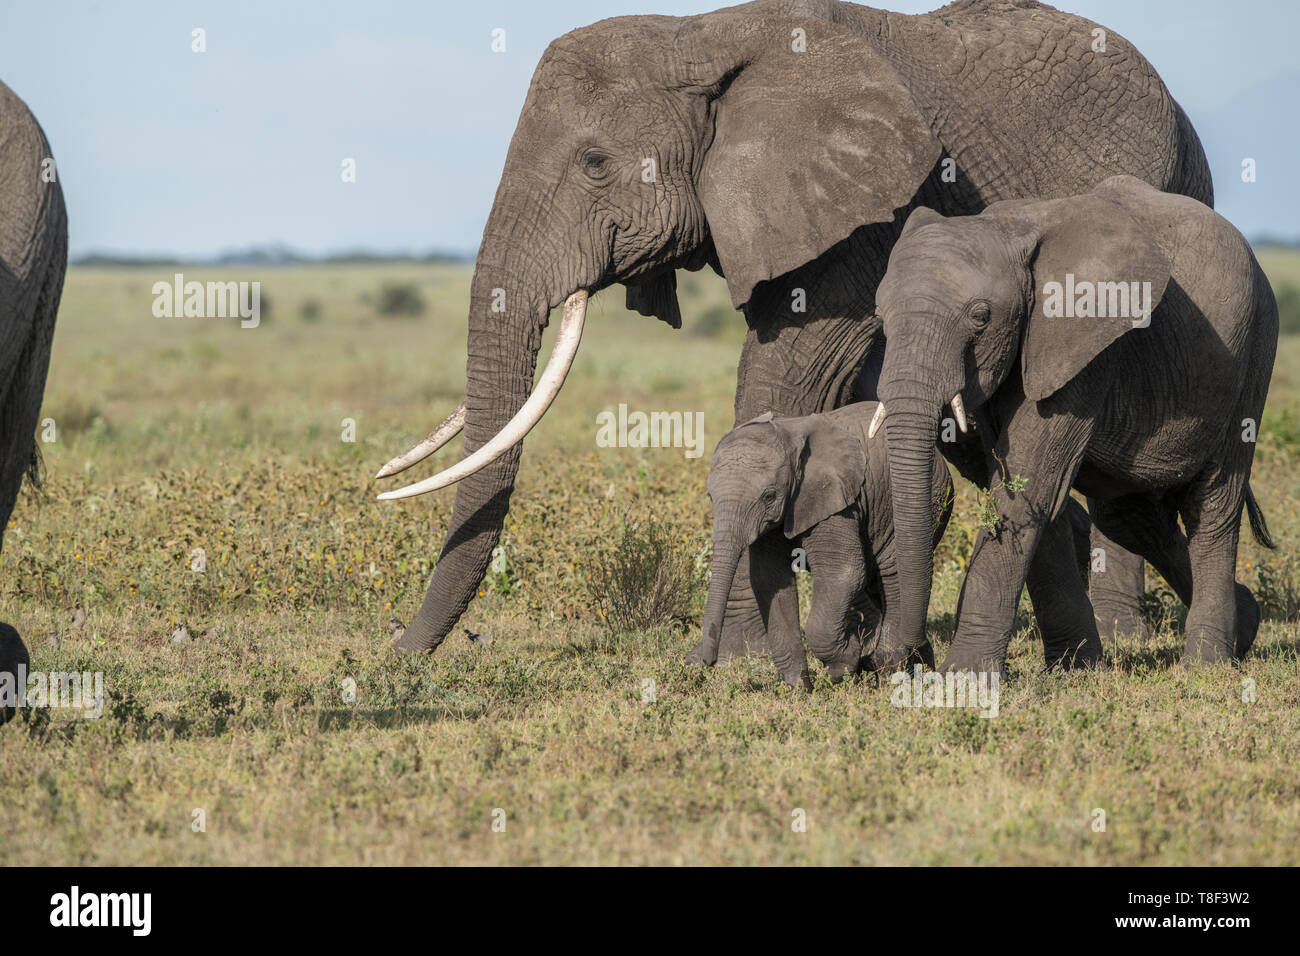 Baby elephant walking with adults, Tanzania Stock Photo